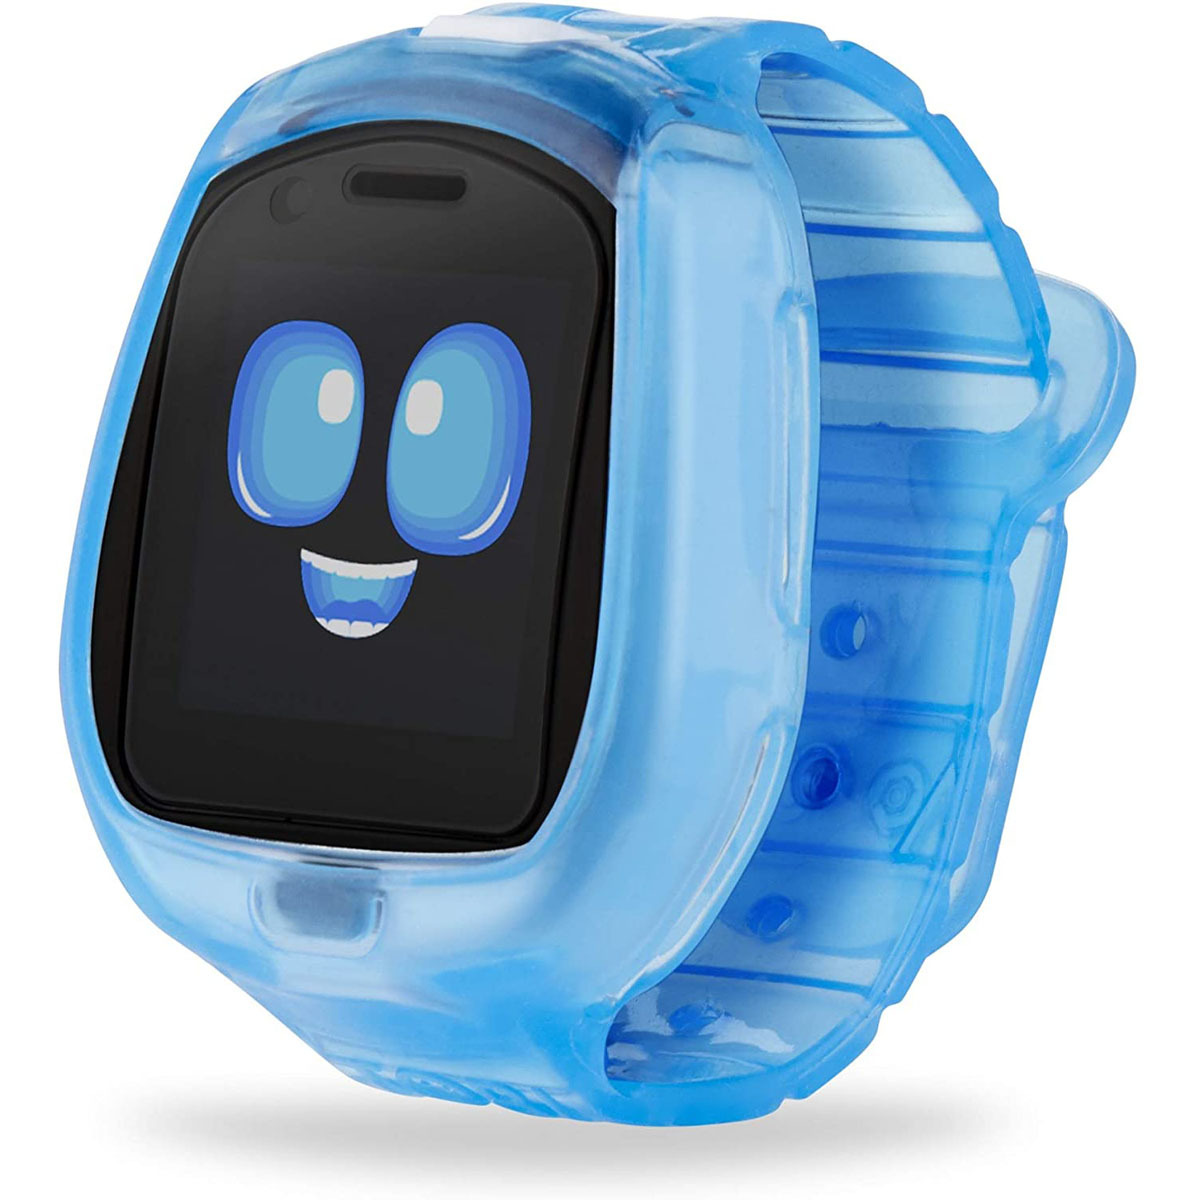 Little Tikes Tobi Robot Smartwatch - Blue | The Entertainer